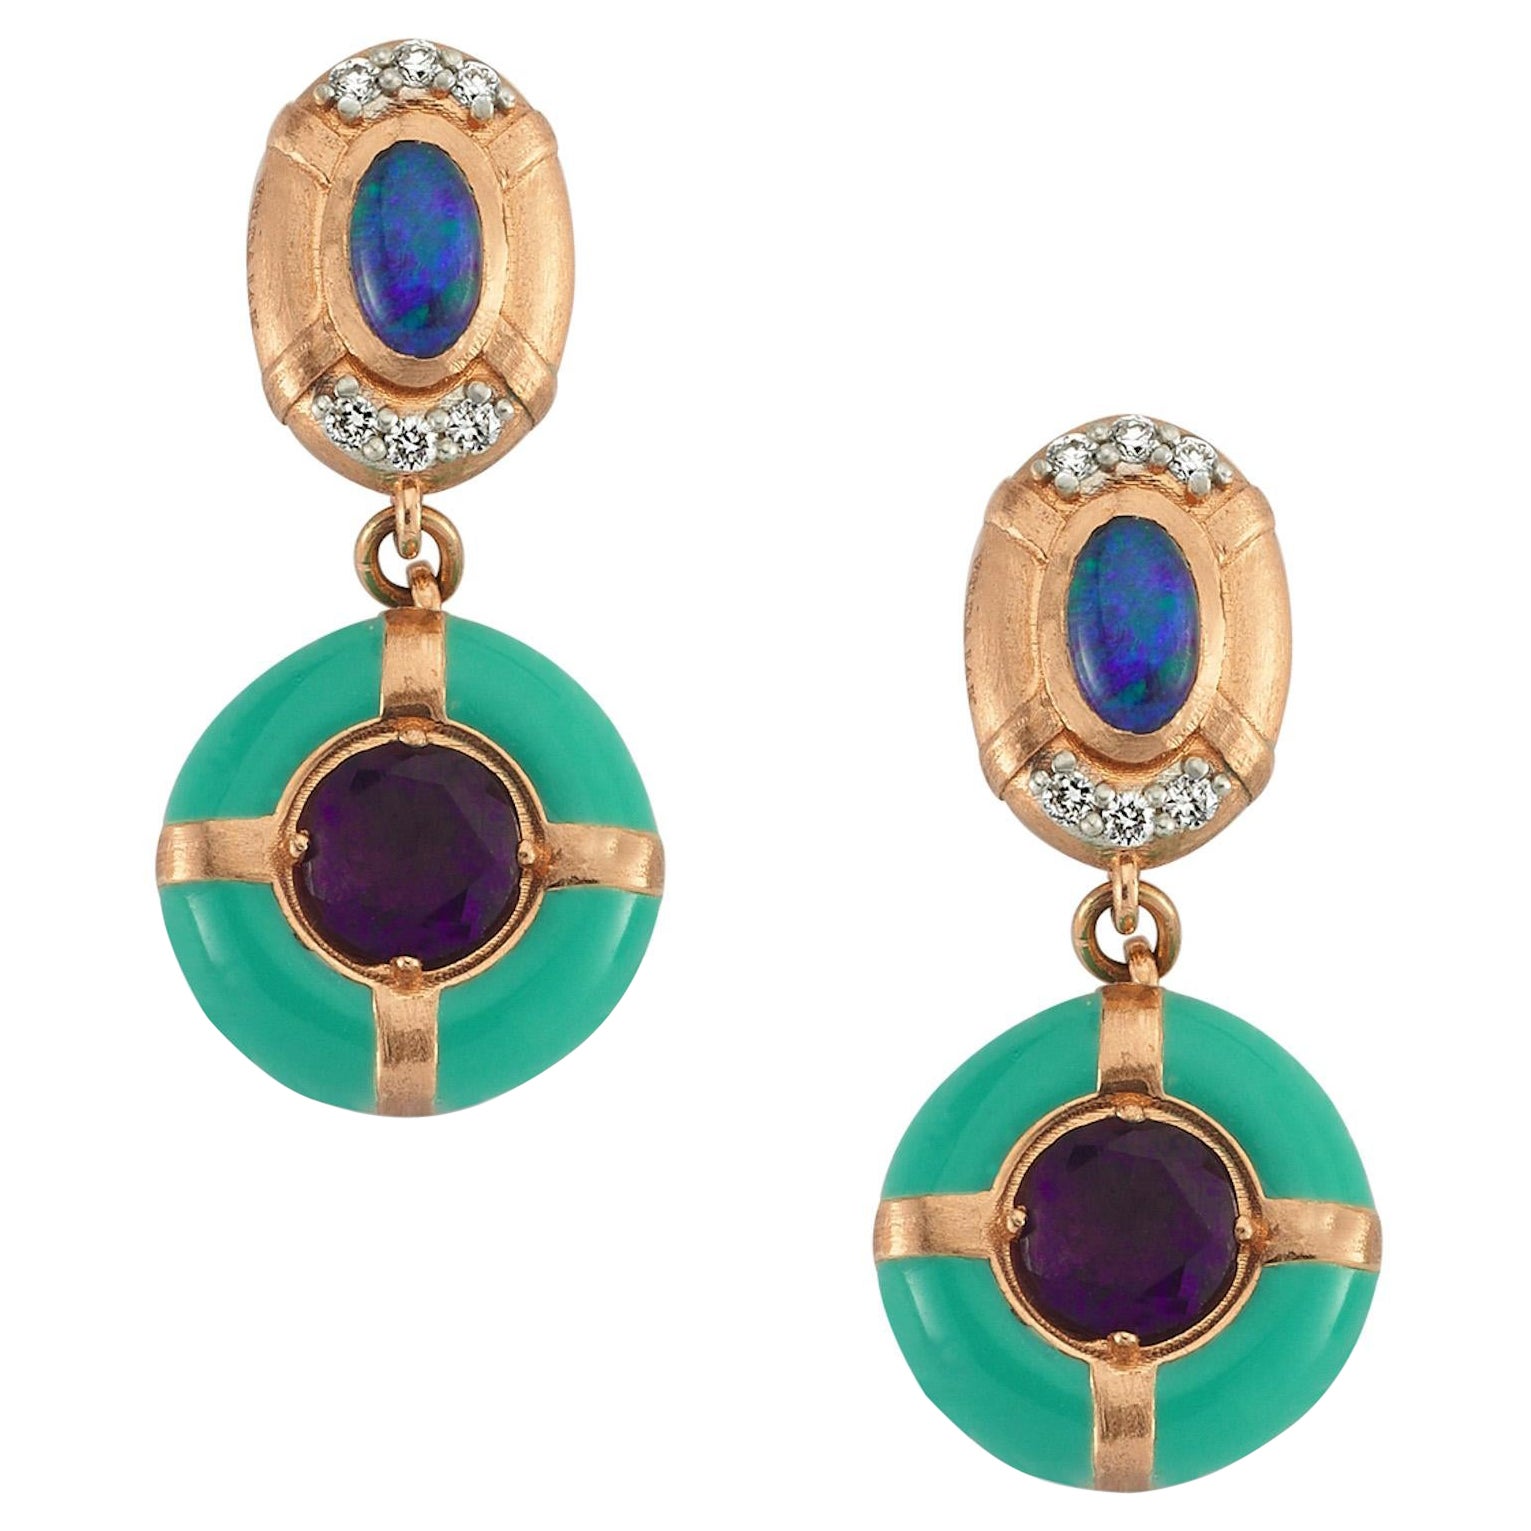 Maia 14k Rose Gold Earrings with Enamel & Amethyst by Selda Jewellery For Sale